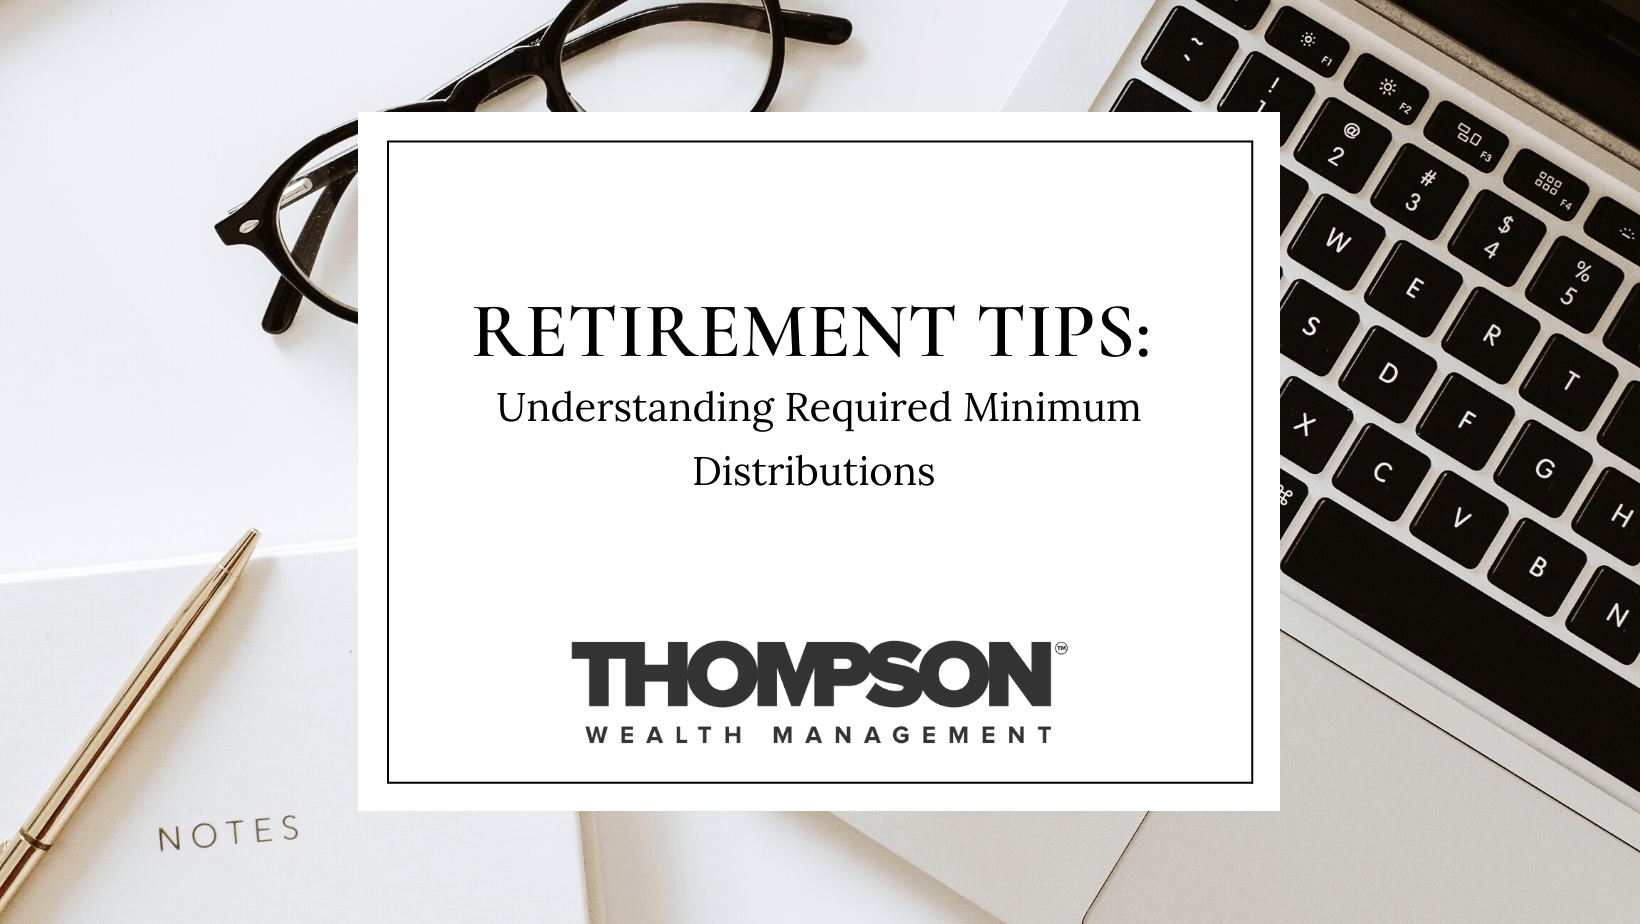 Retirement Tips: Understanding Required Minimum Distributions